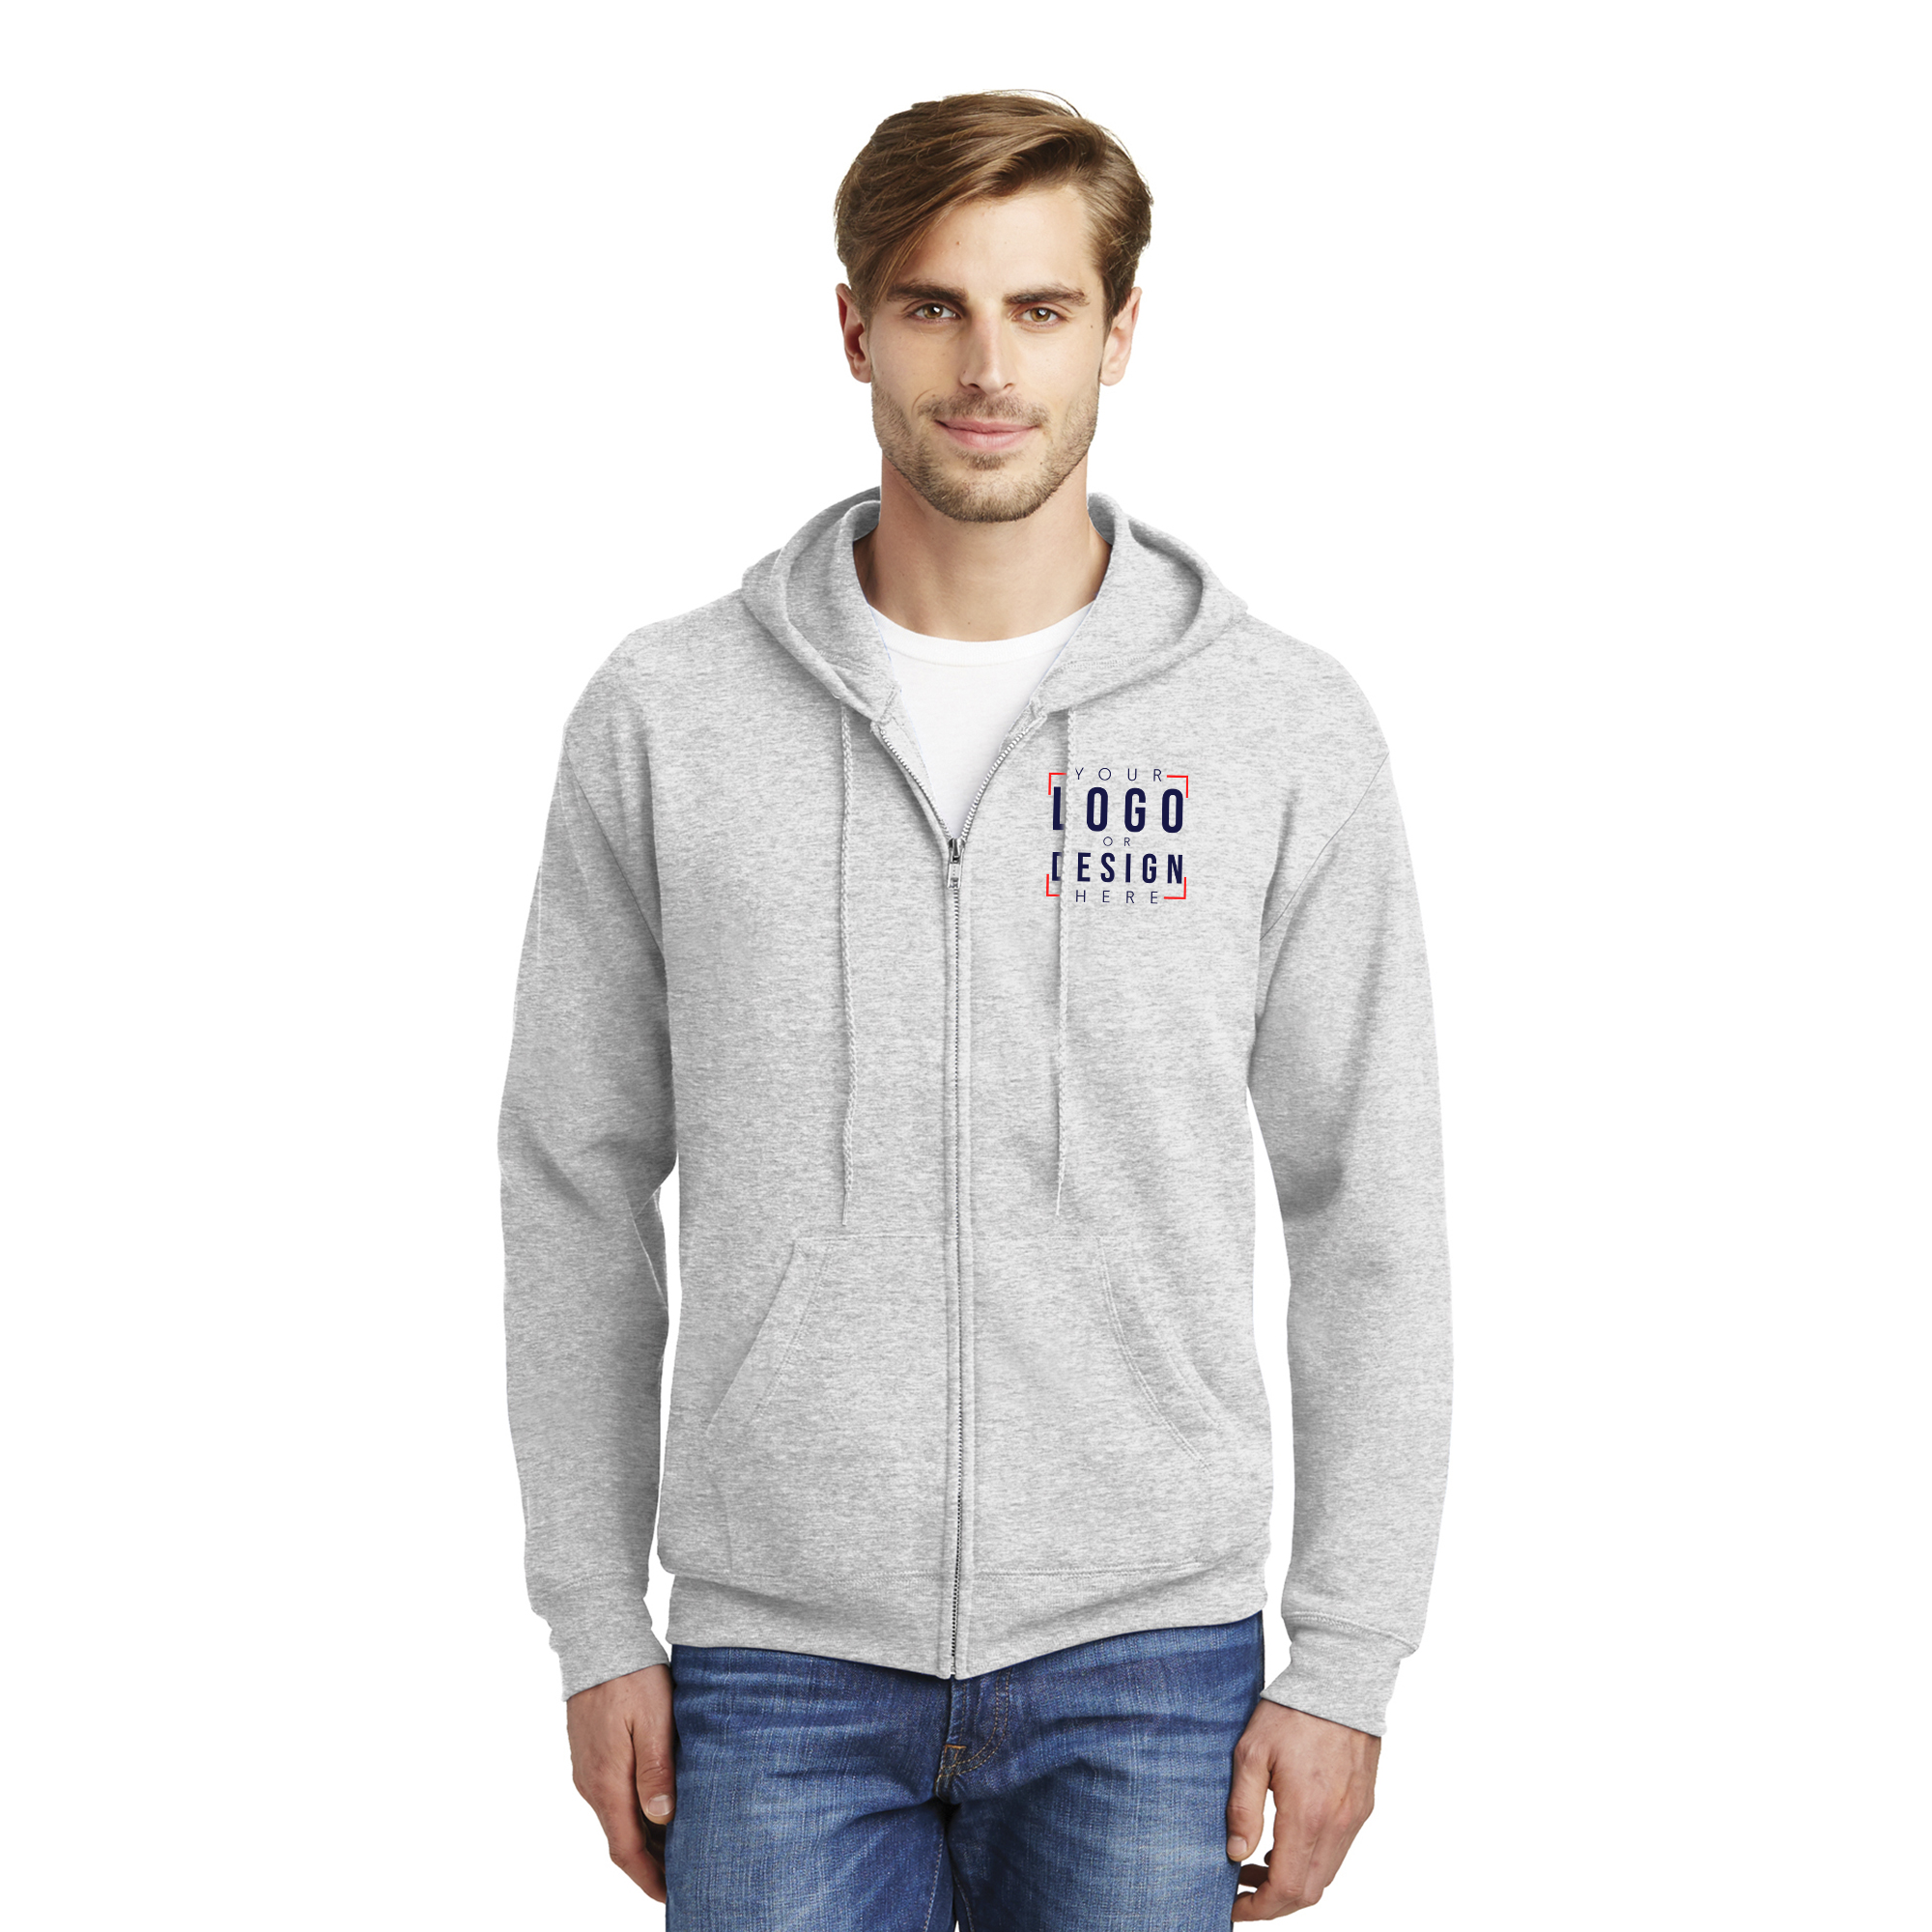 Hanes - EcoSmart Full-Zip Hooded Sweatshirt.